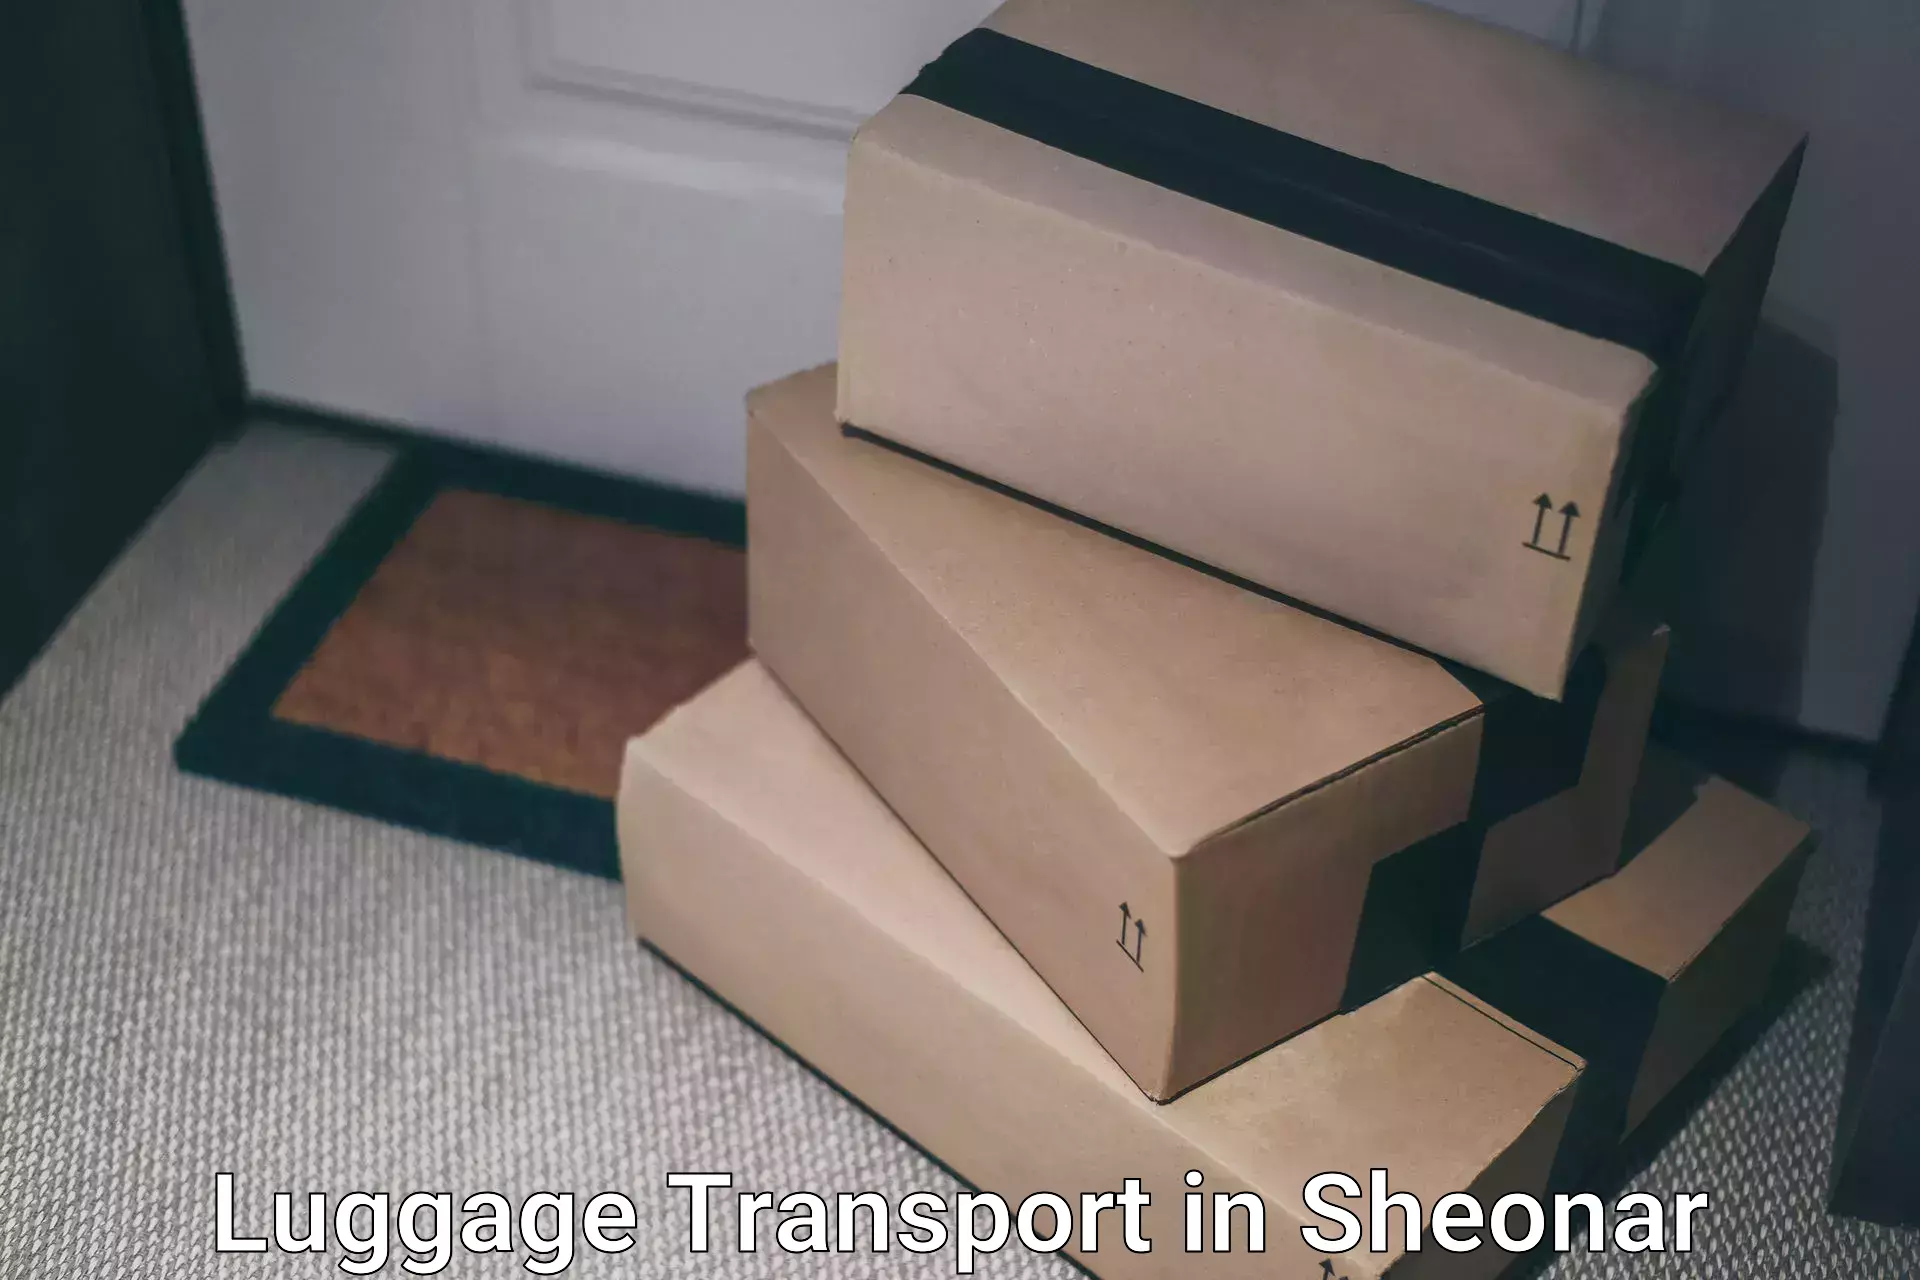 Luggage transit service in Sheonar